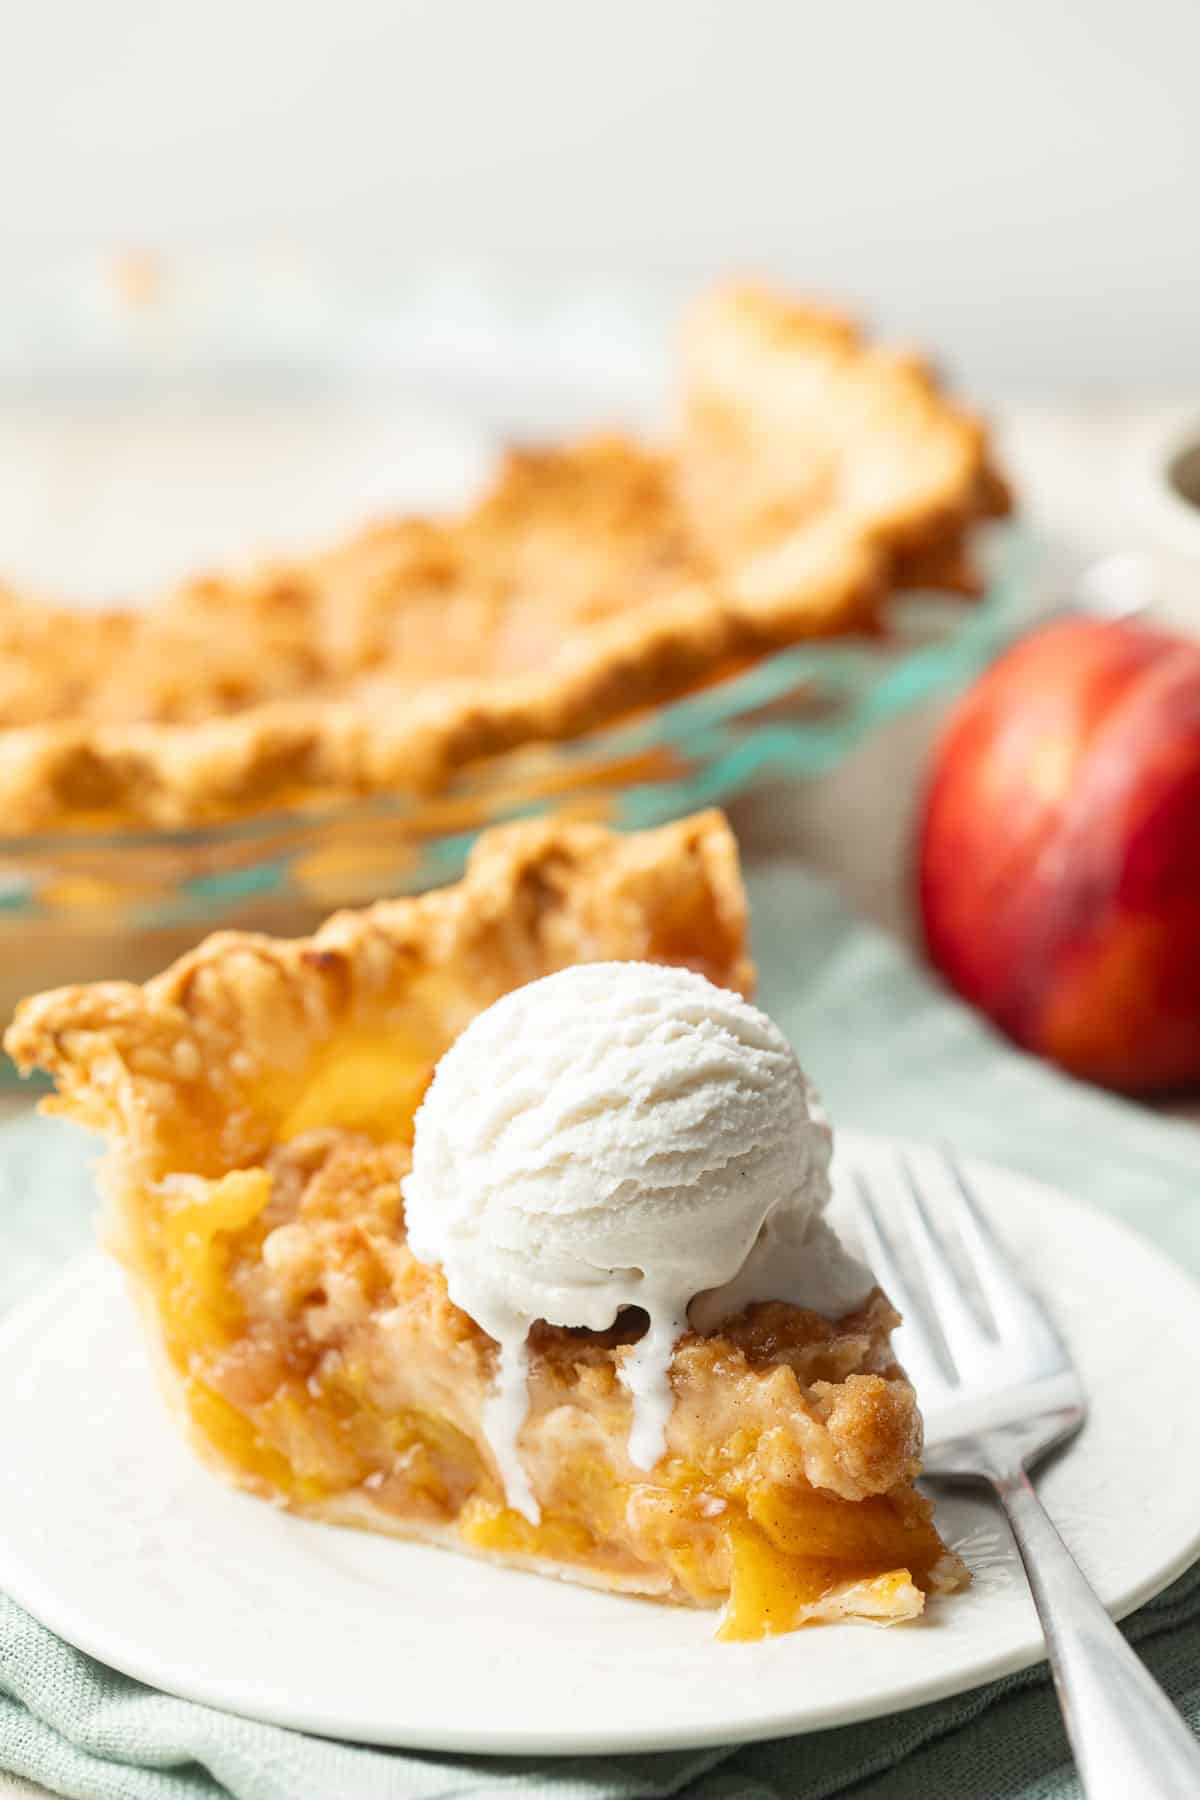 Slice of Vegan Peach Pie with vanilla ice cream, peaches and pie plate in the background.